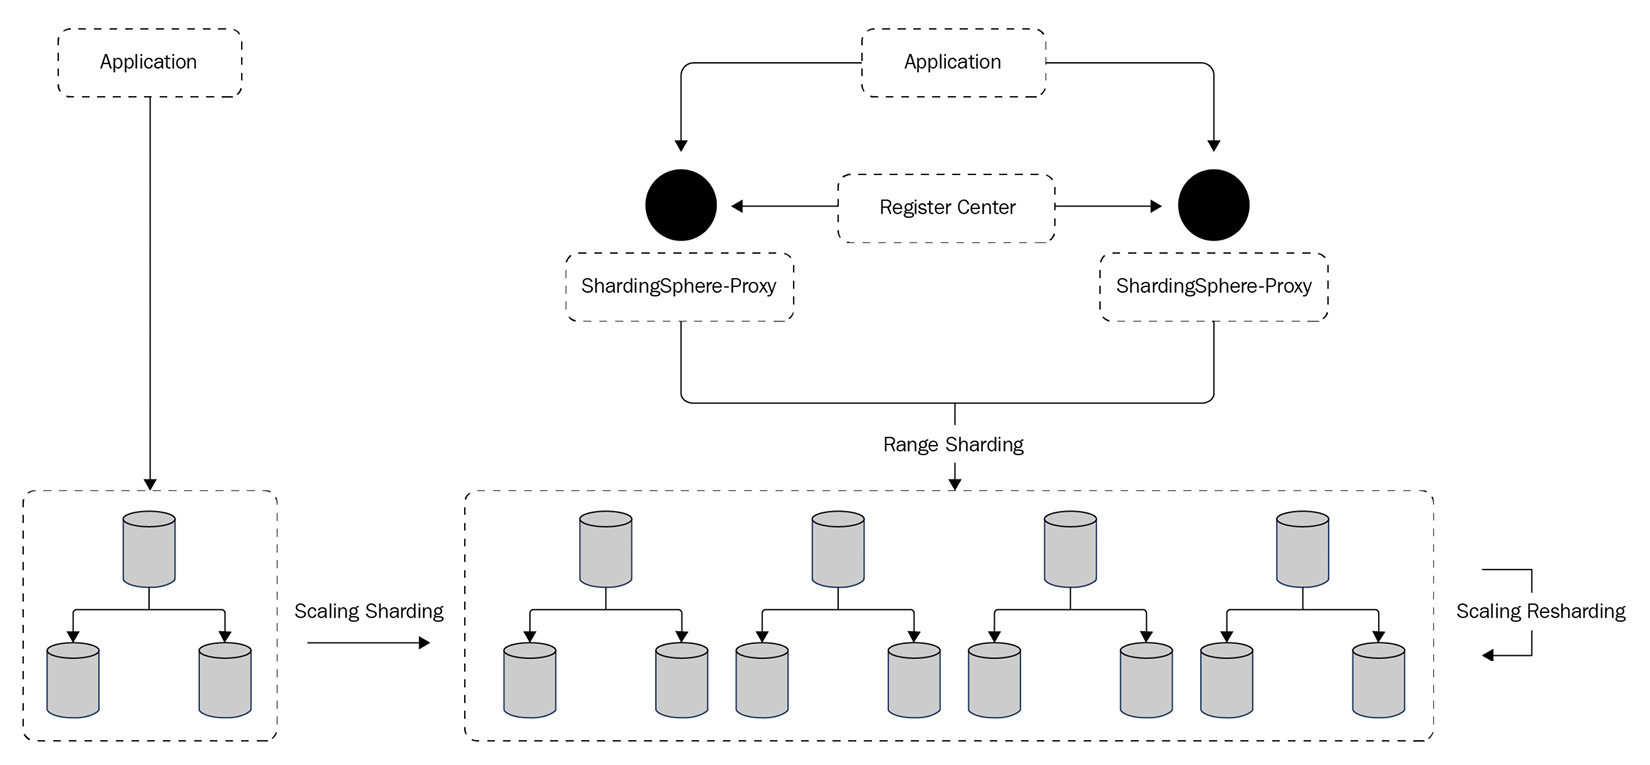 Figure 12.5 – Case 2 deployment architecture
